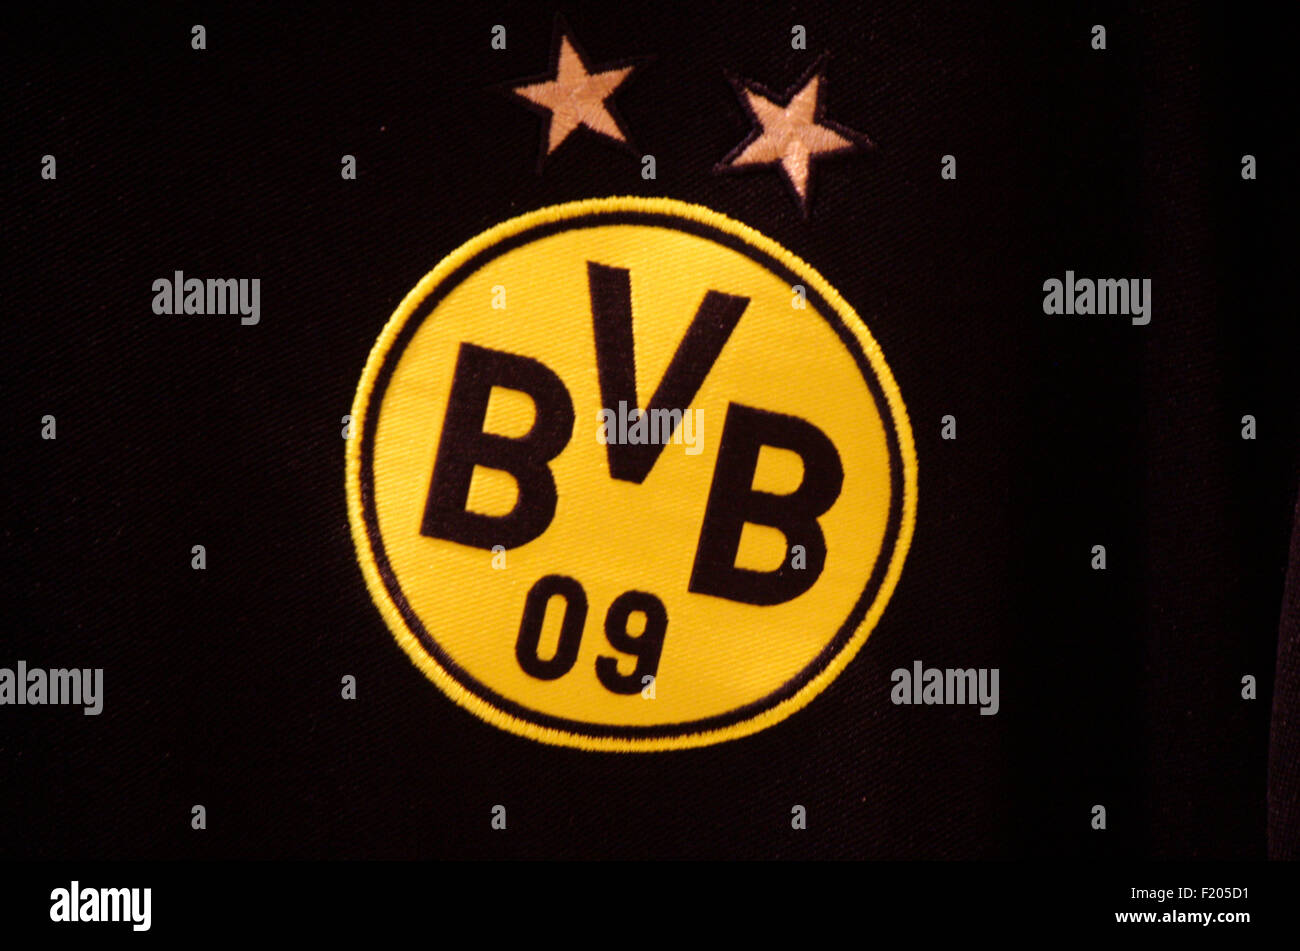 Markenname: 'BVB Borussia Dortmund', Berlin. Stock Photo